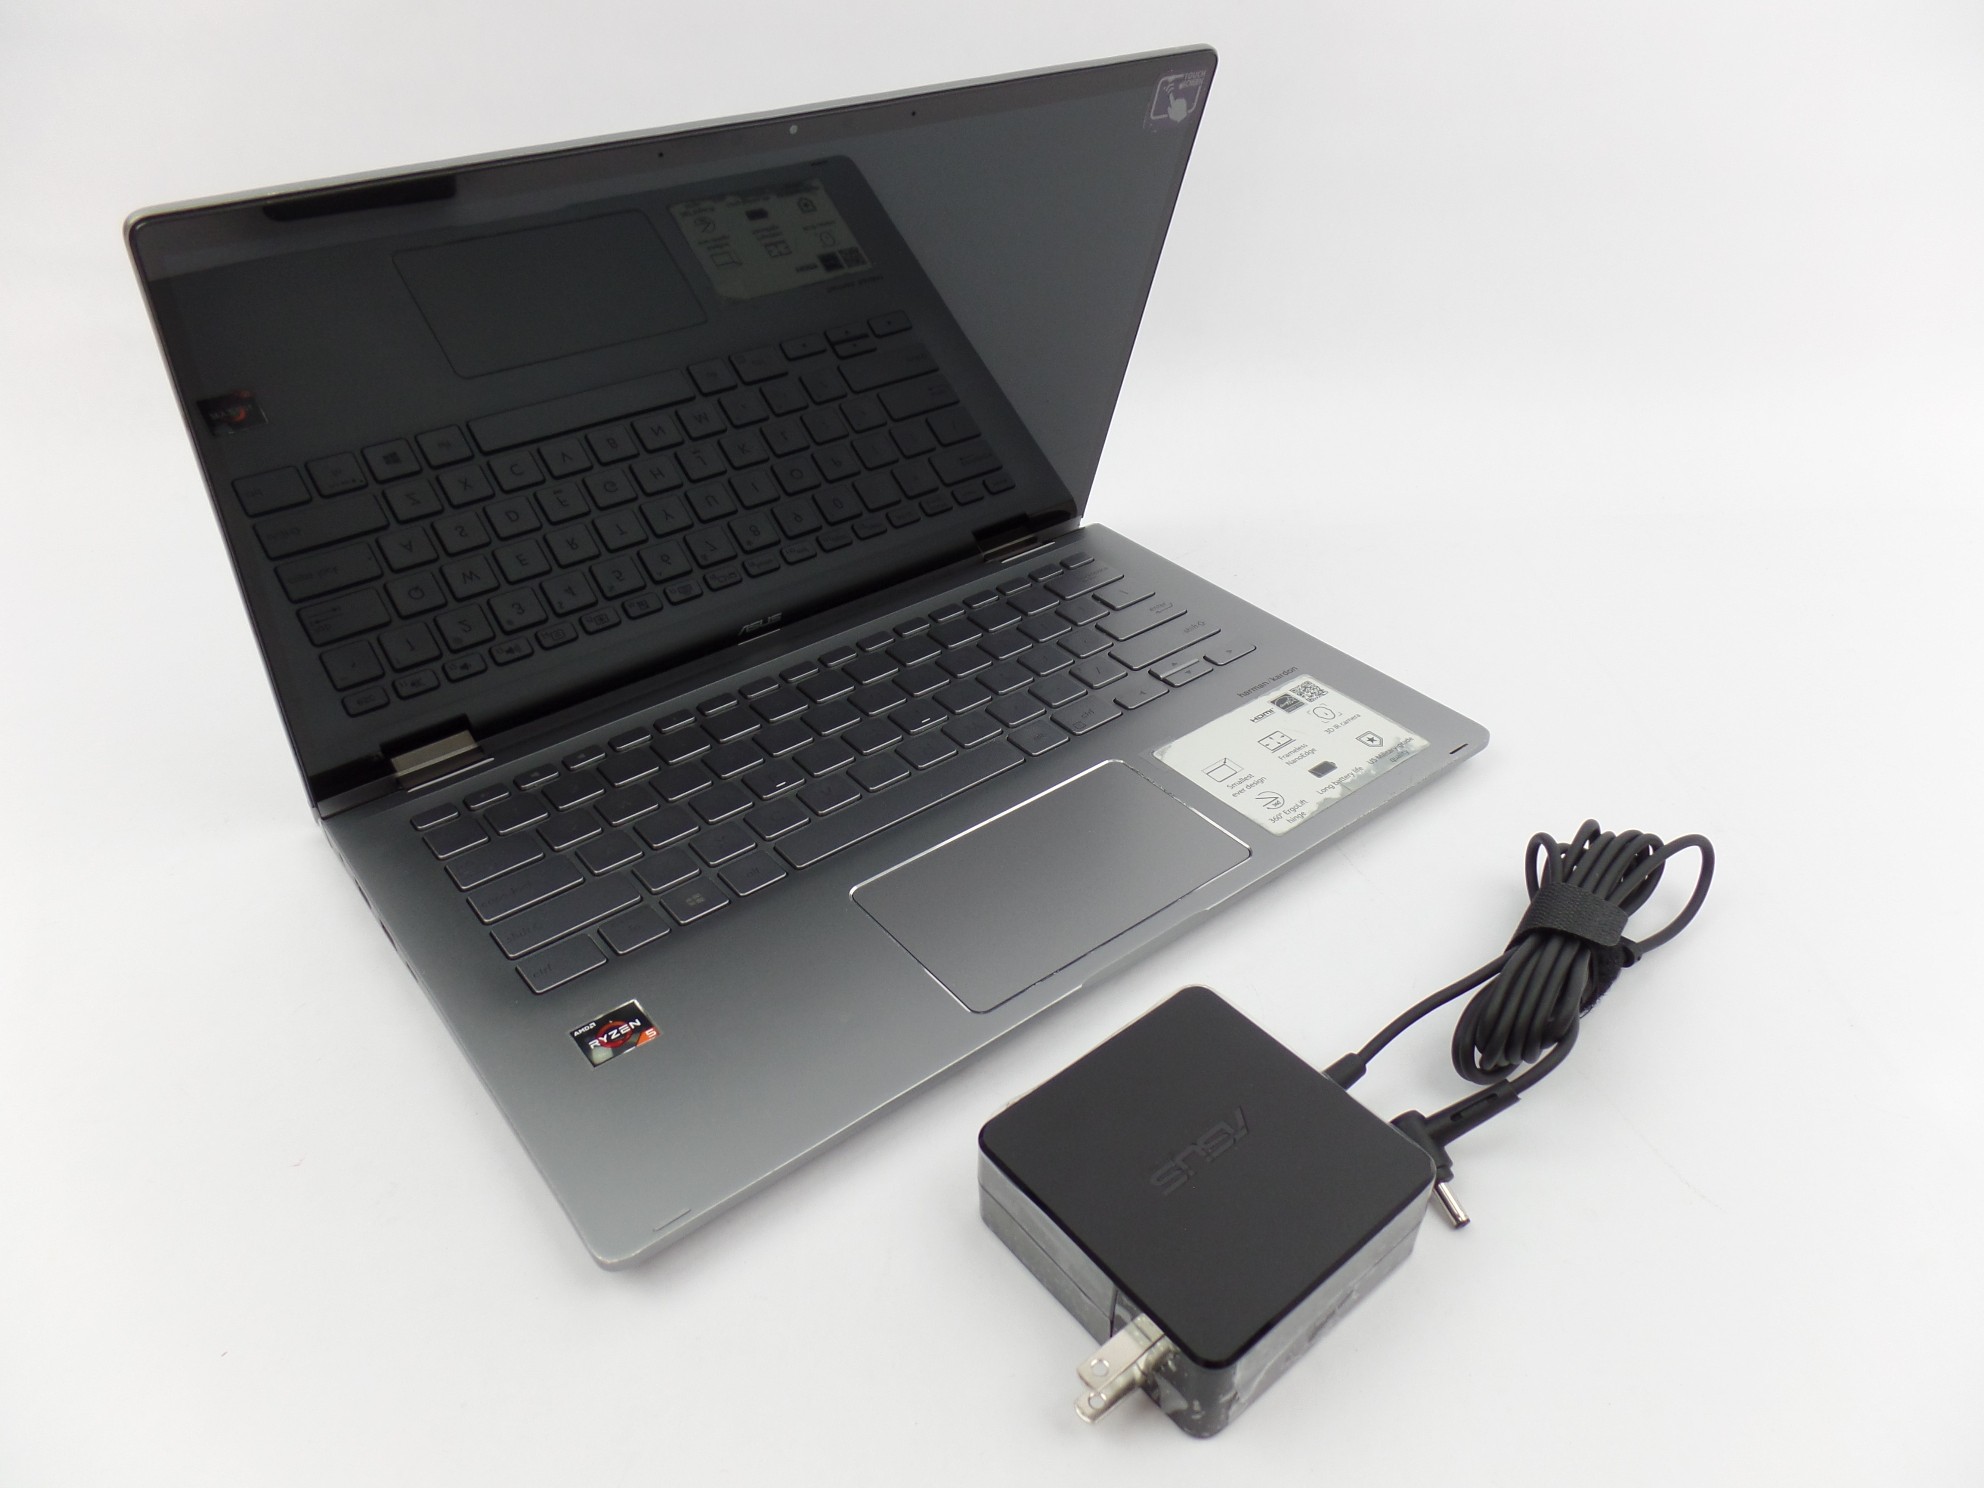 ASUS Q406DA-BR5T6 14" FHD Touch AMD Ryzen 5 3500U 8GB 256GB W10H 2in1 Laptop U1